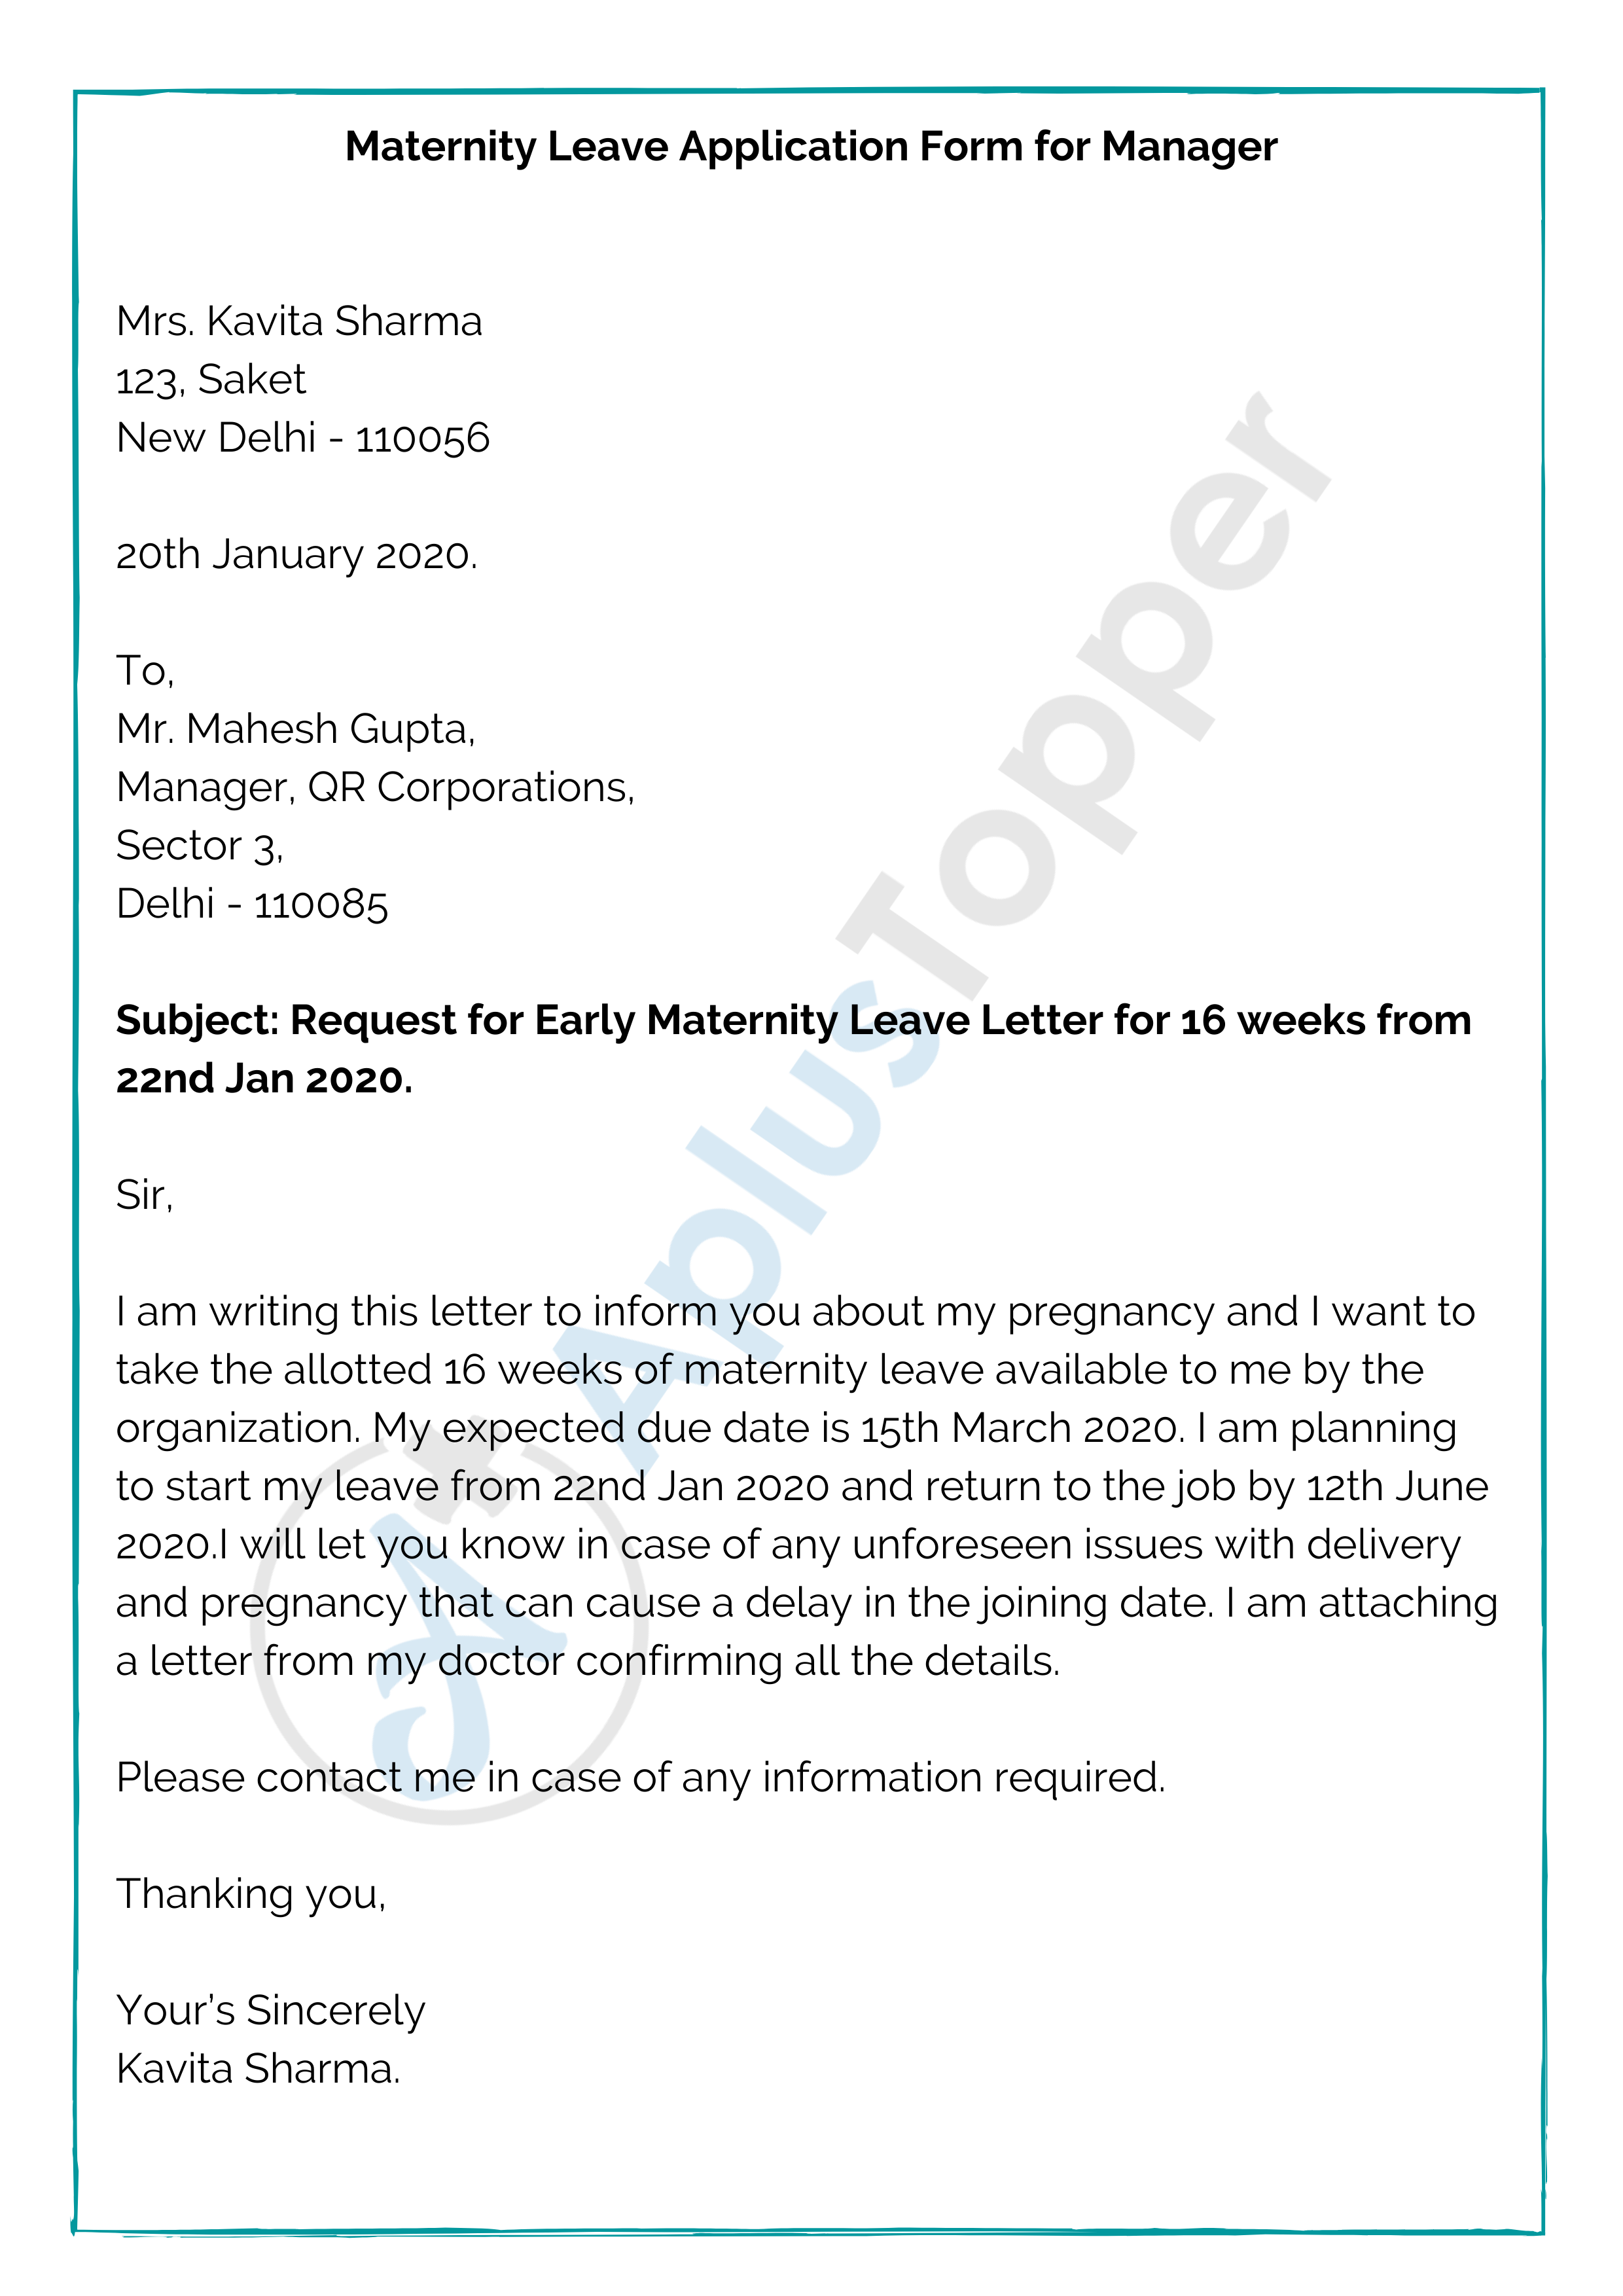 https://www.aplustopper.com/wp-content/uploads/2020/03/Maternity-Leave-Application-Form-for-Manager.png